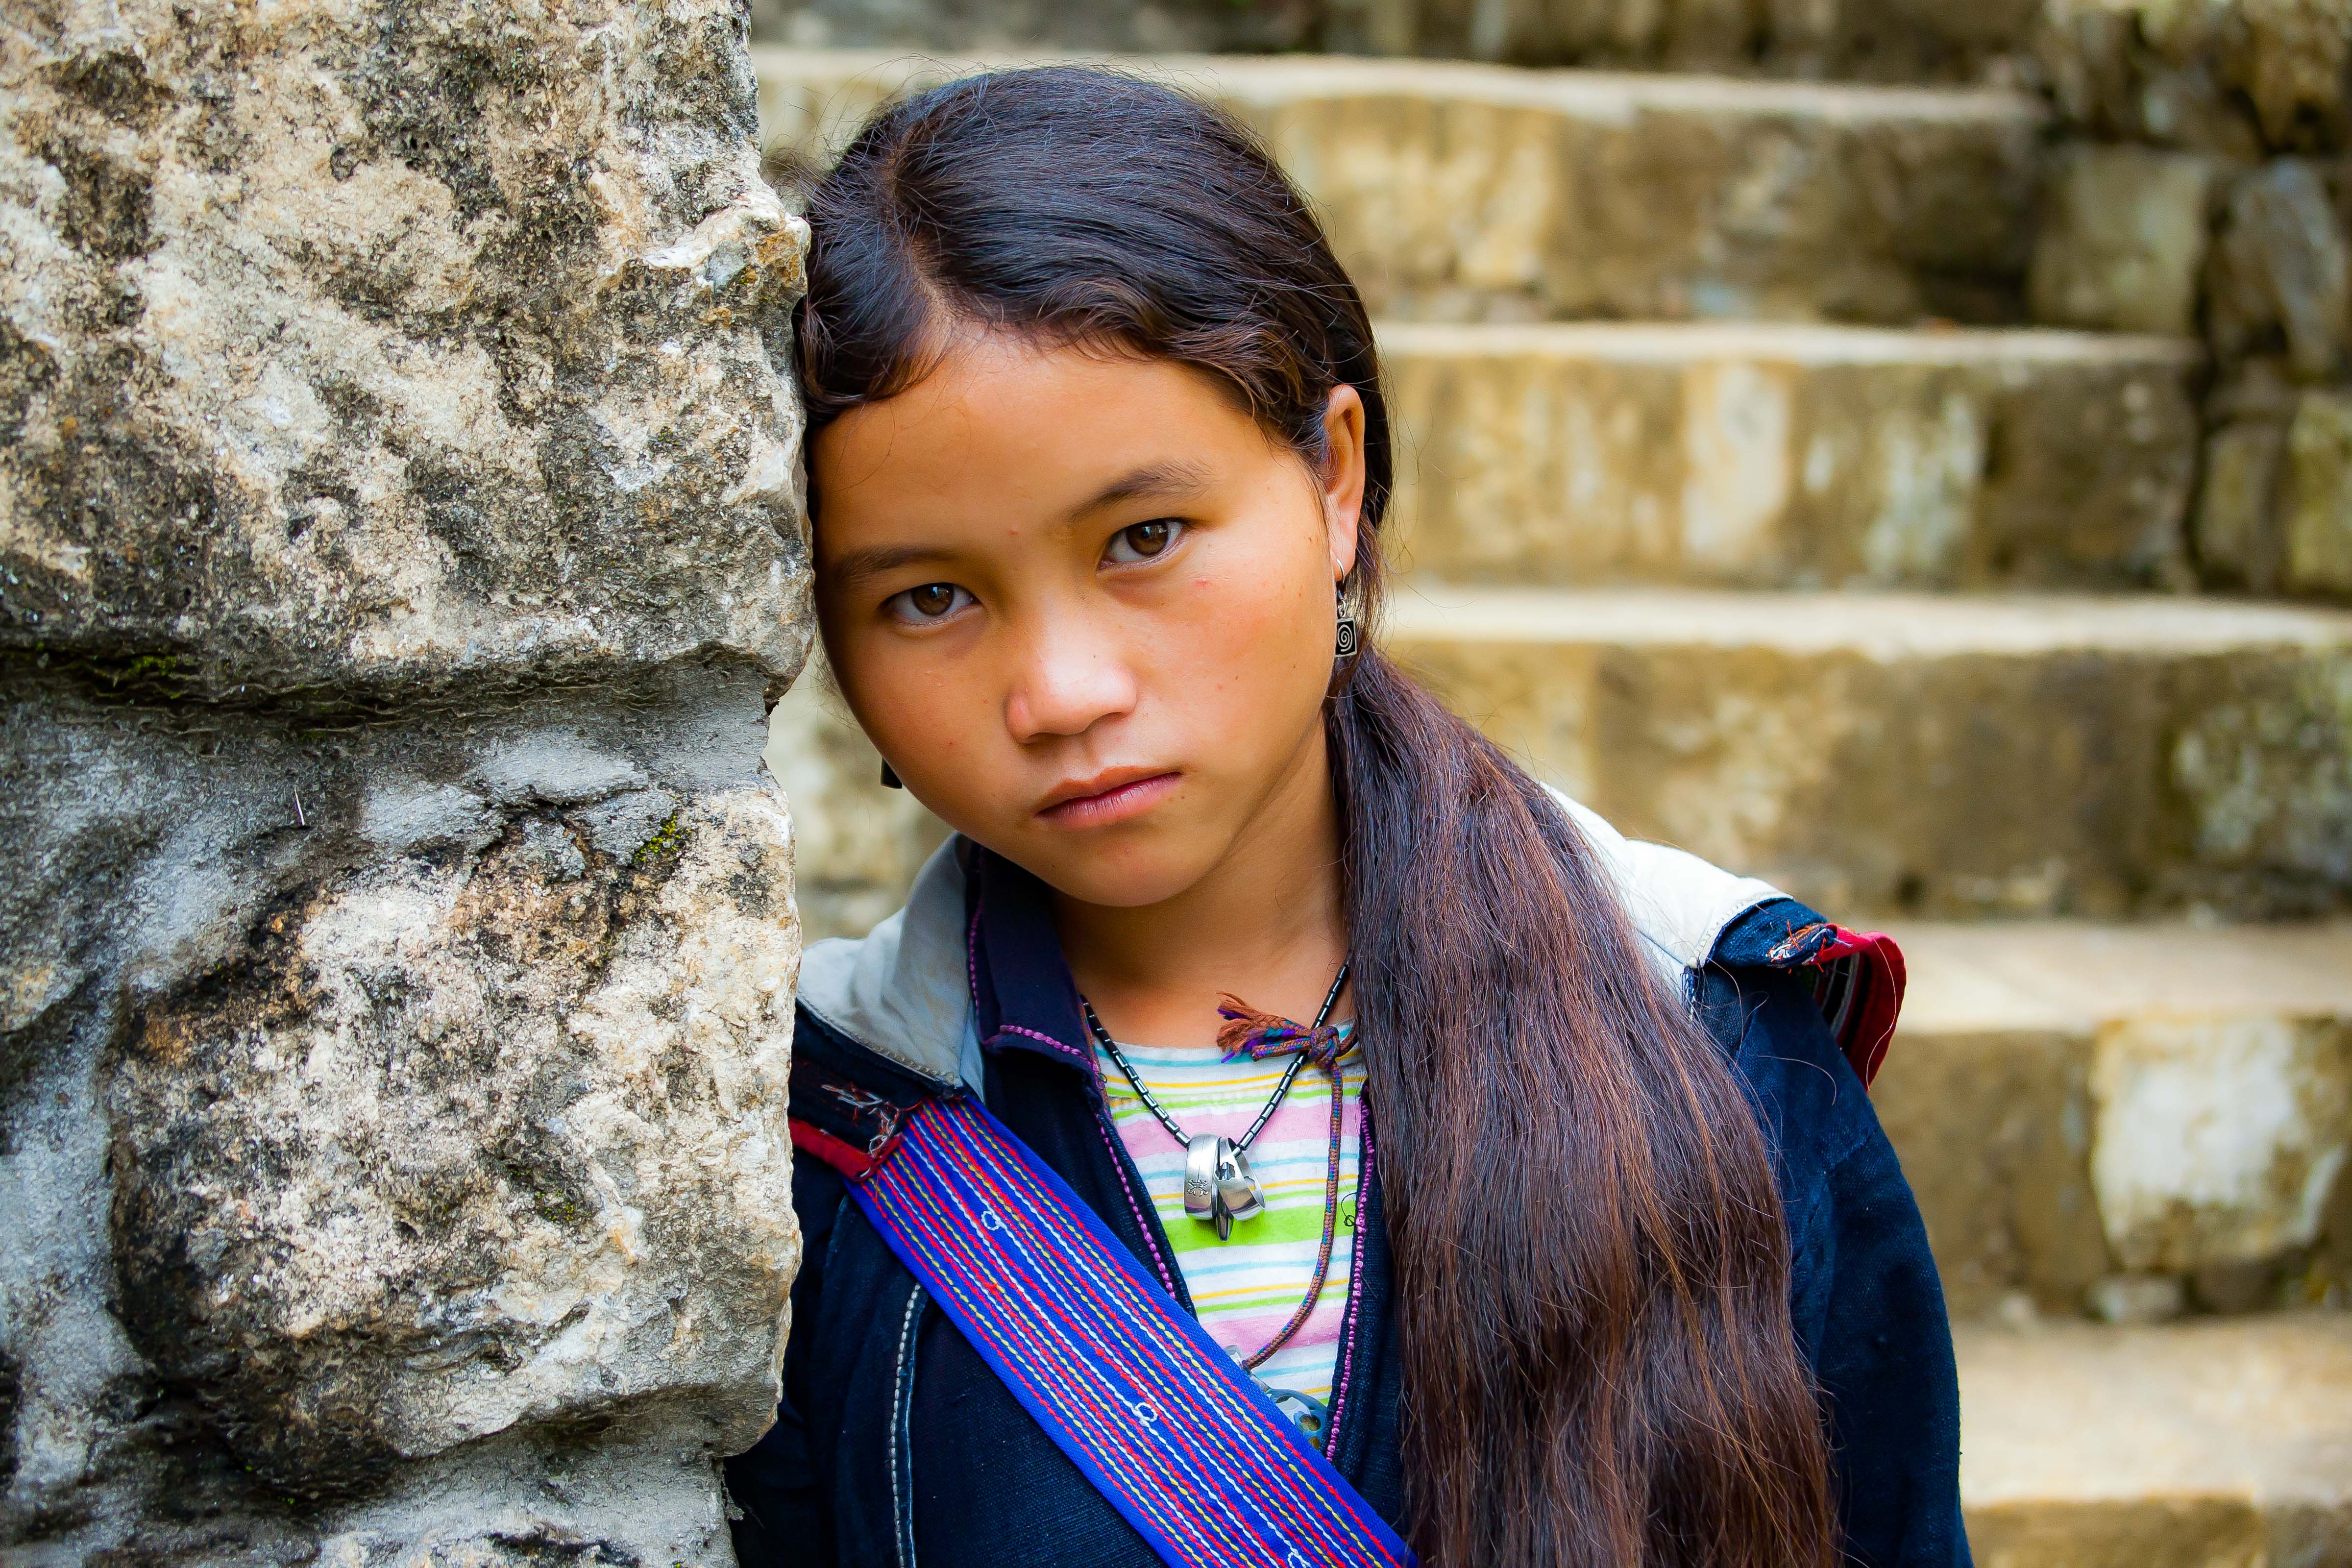 Vietnam, Lao Cai Prov, A Girl Named Cha, 2008, IMG 8471